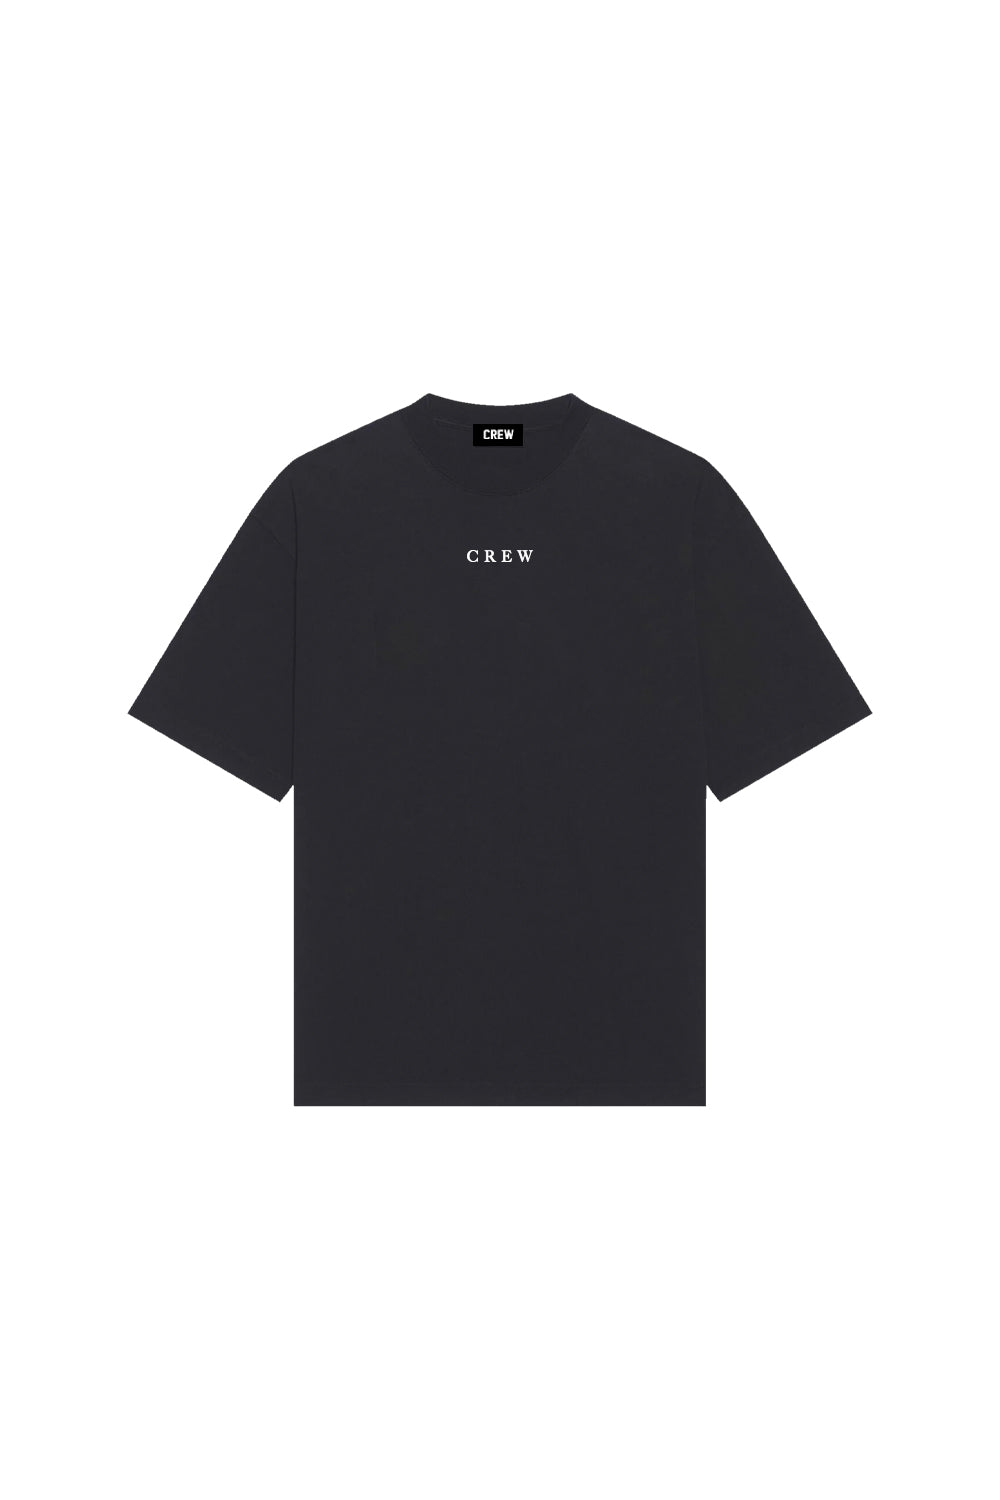 CREW Milano LOS ANGELS Black T-Shirt